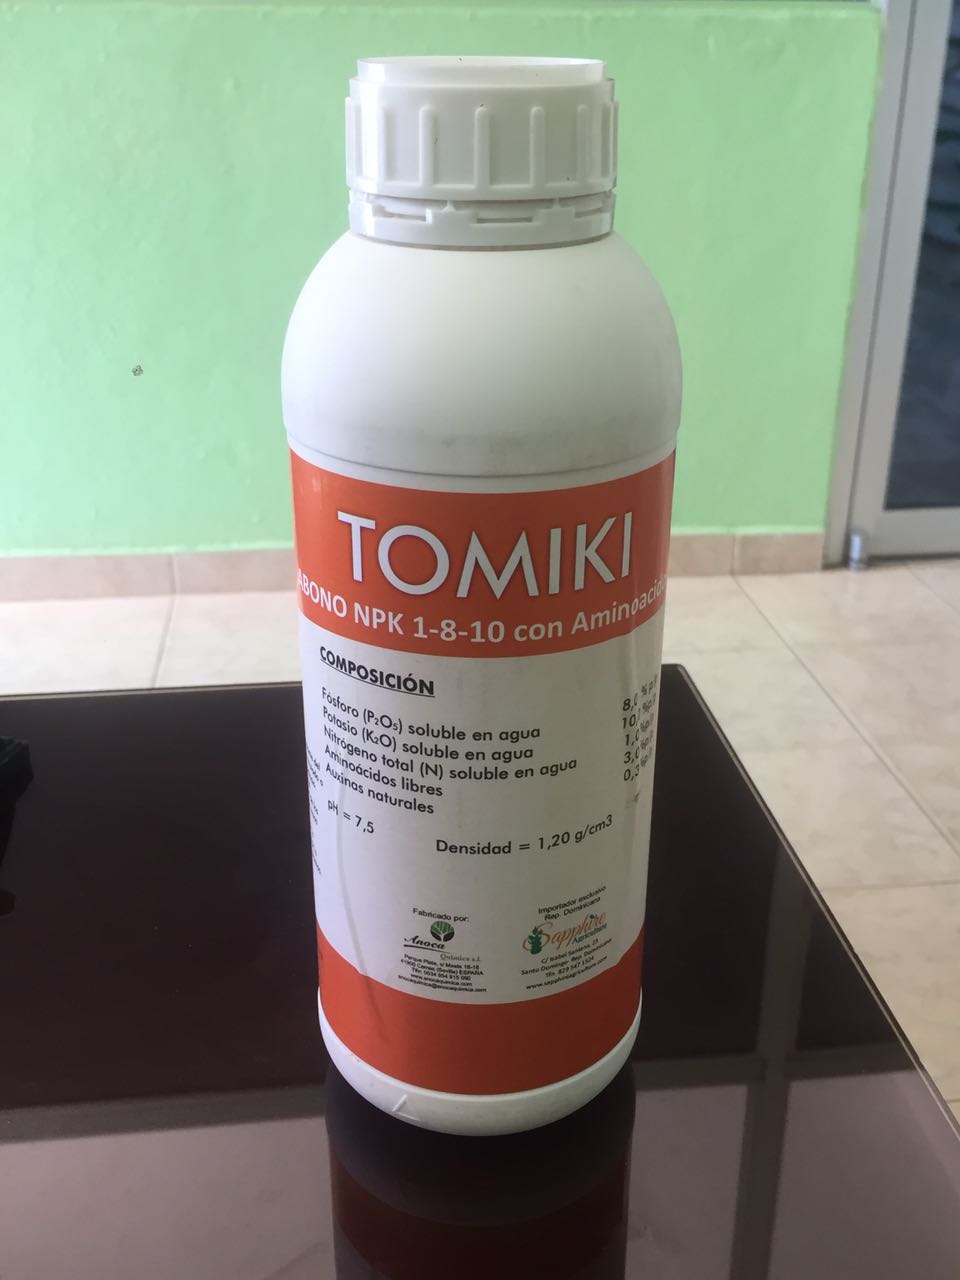 Tomiki (Enraizador organo-mineral) Image